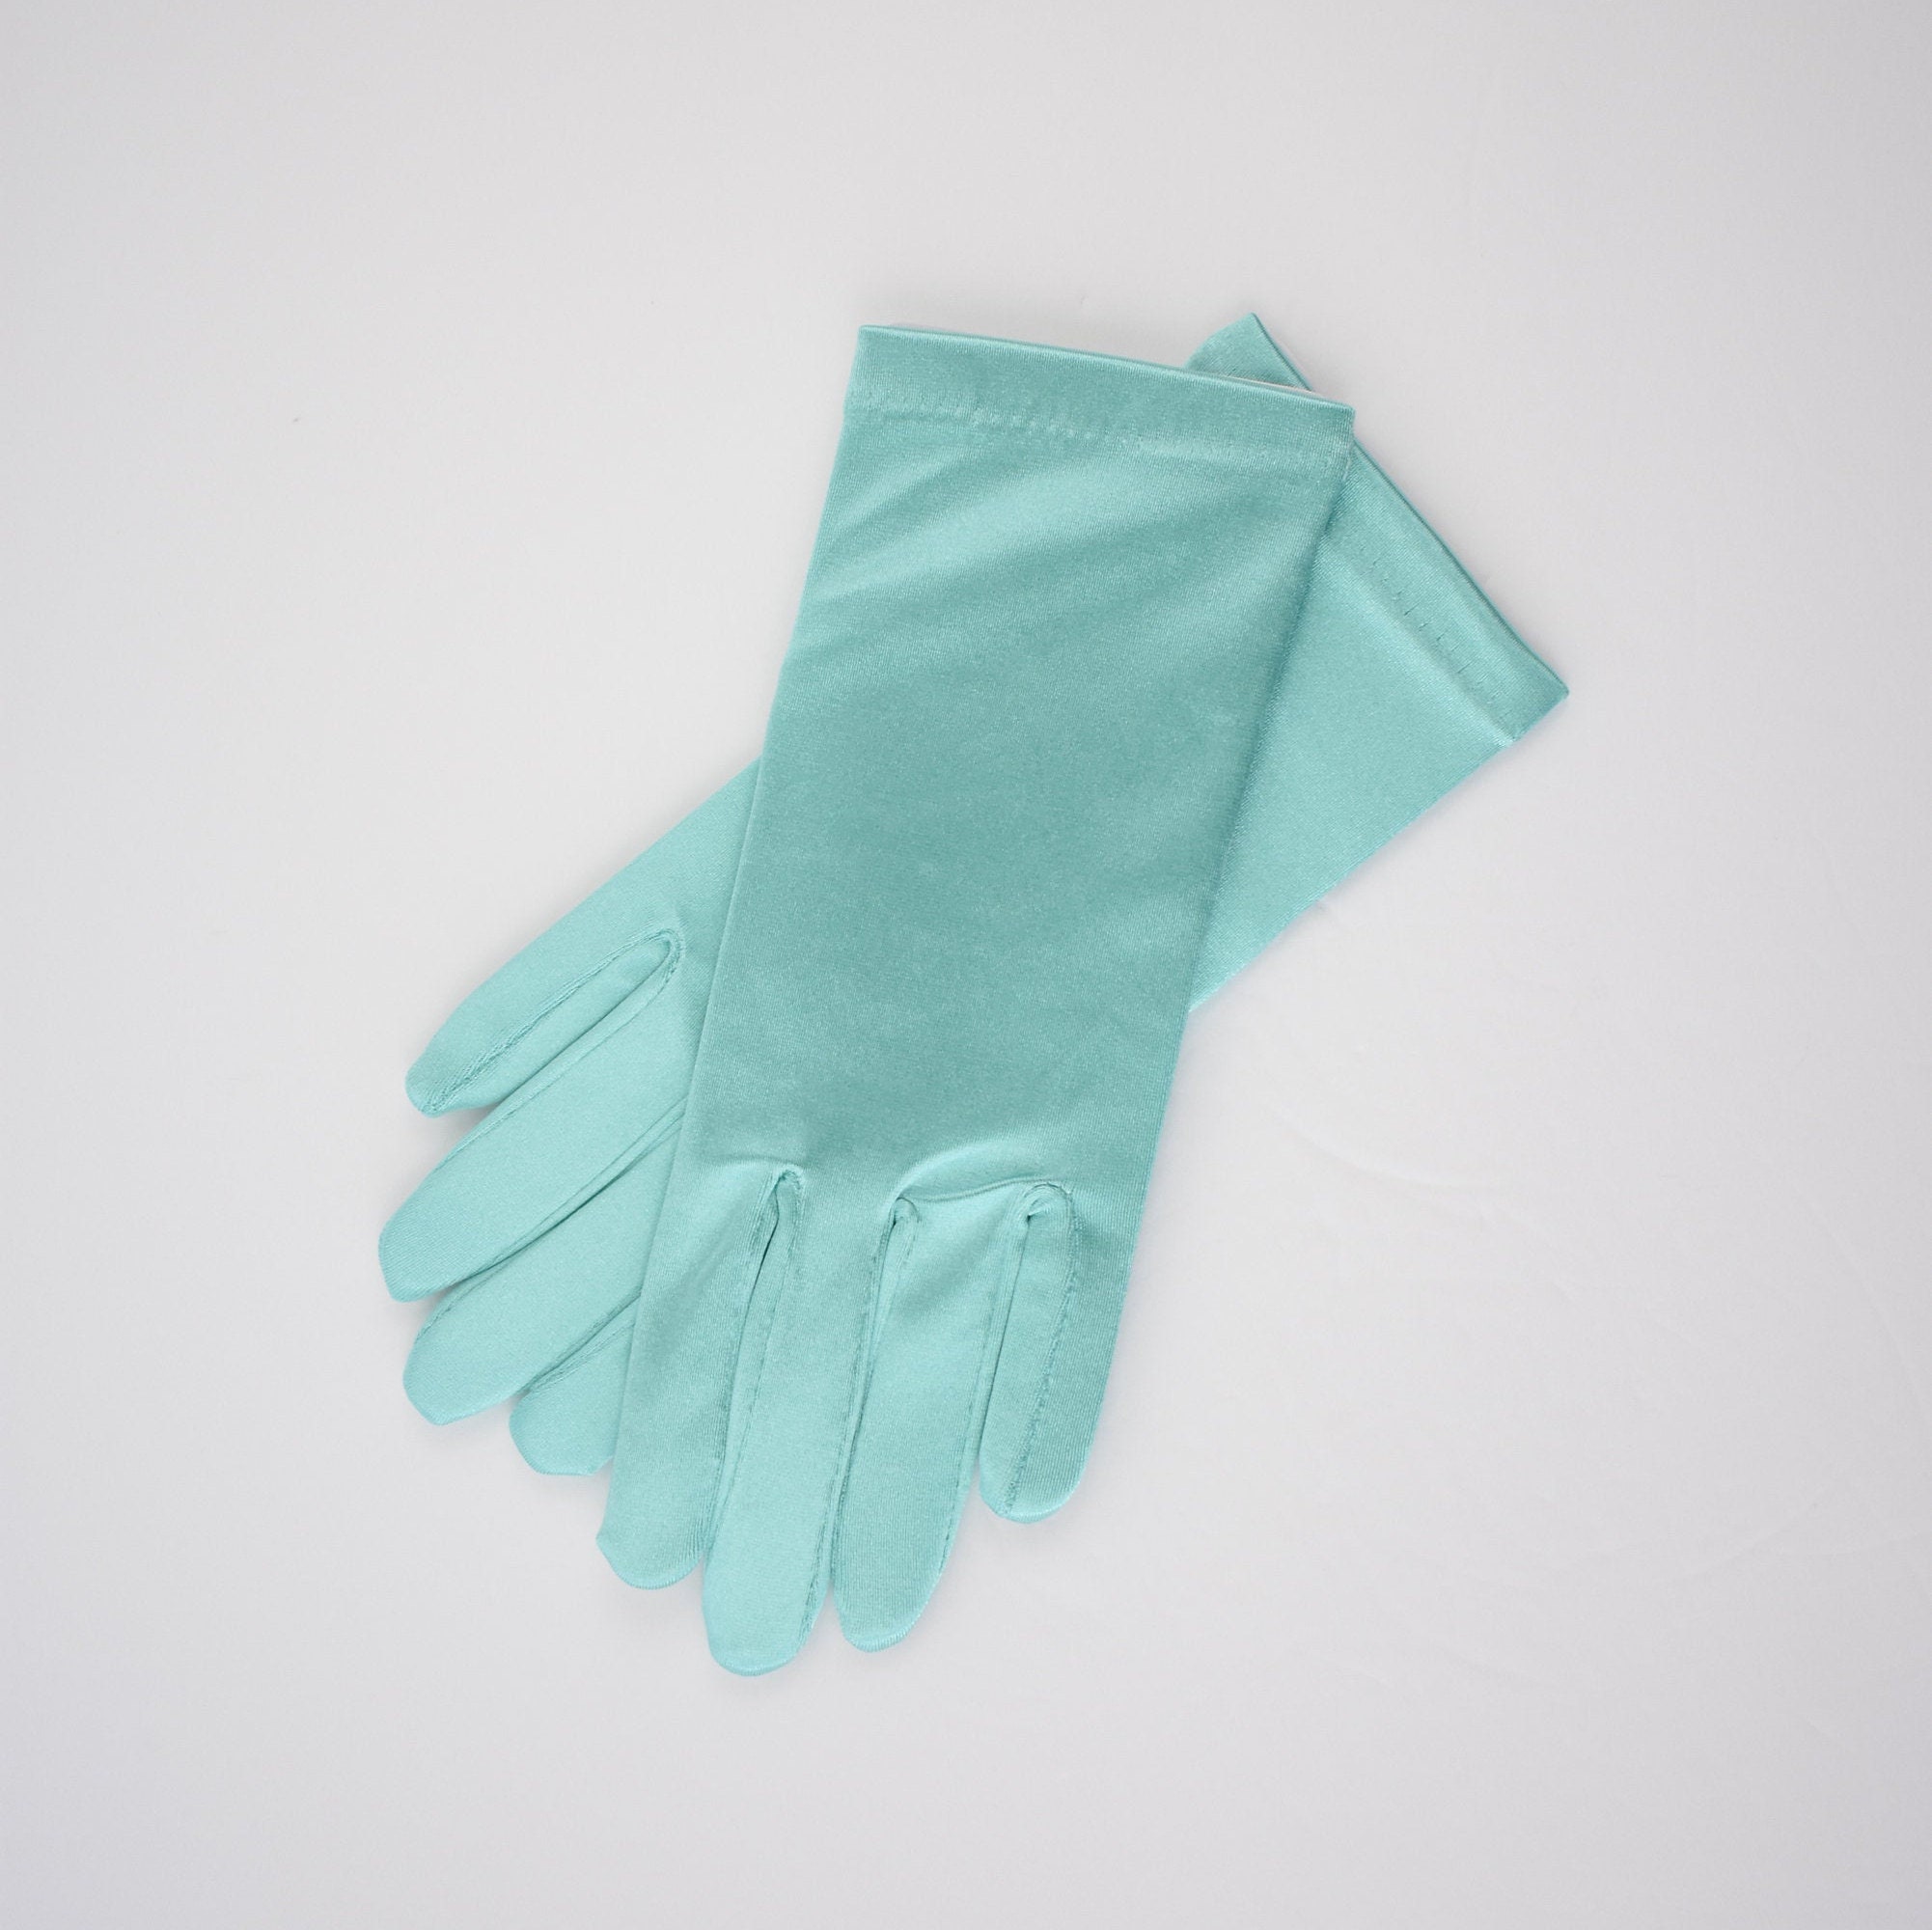 Aqua Blue Stretch Satin Gloves / Bridal Gloves / Long Full | Etsy